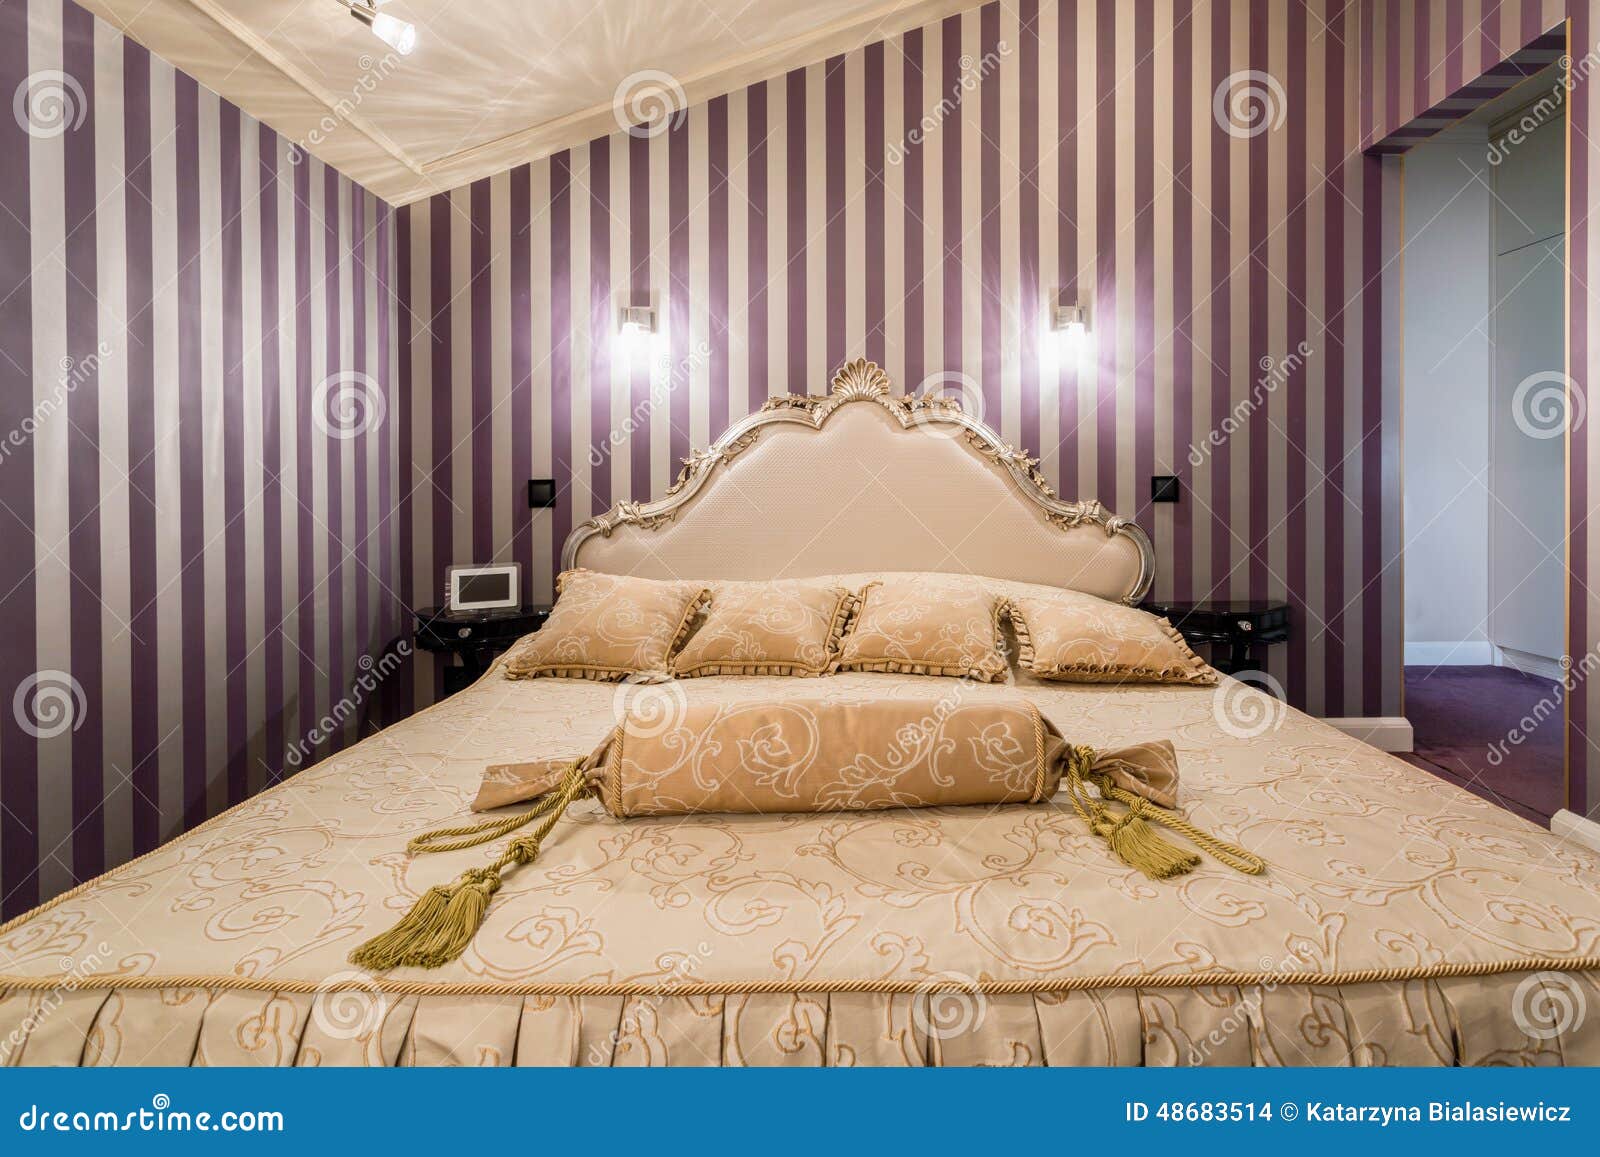 enormous bed inside baroque bedroom